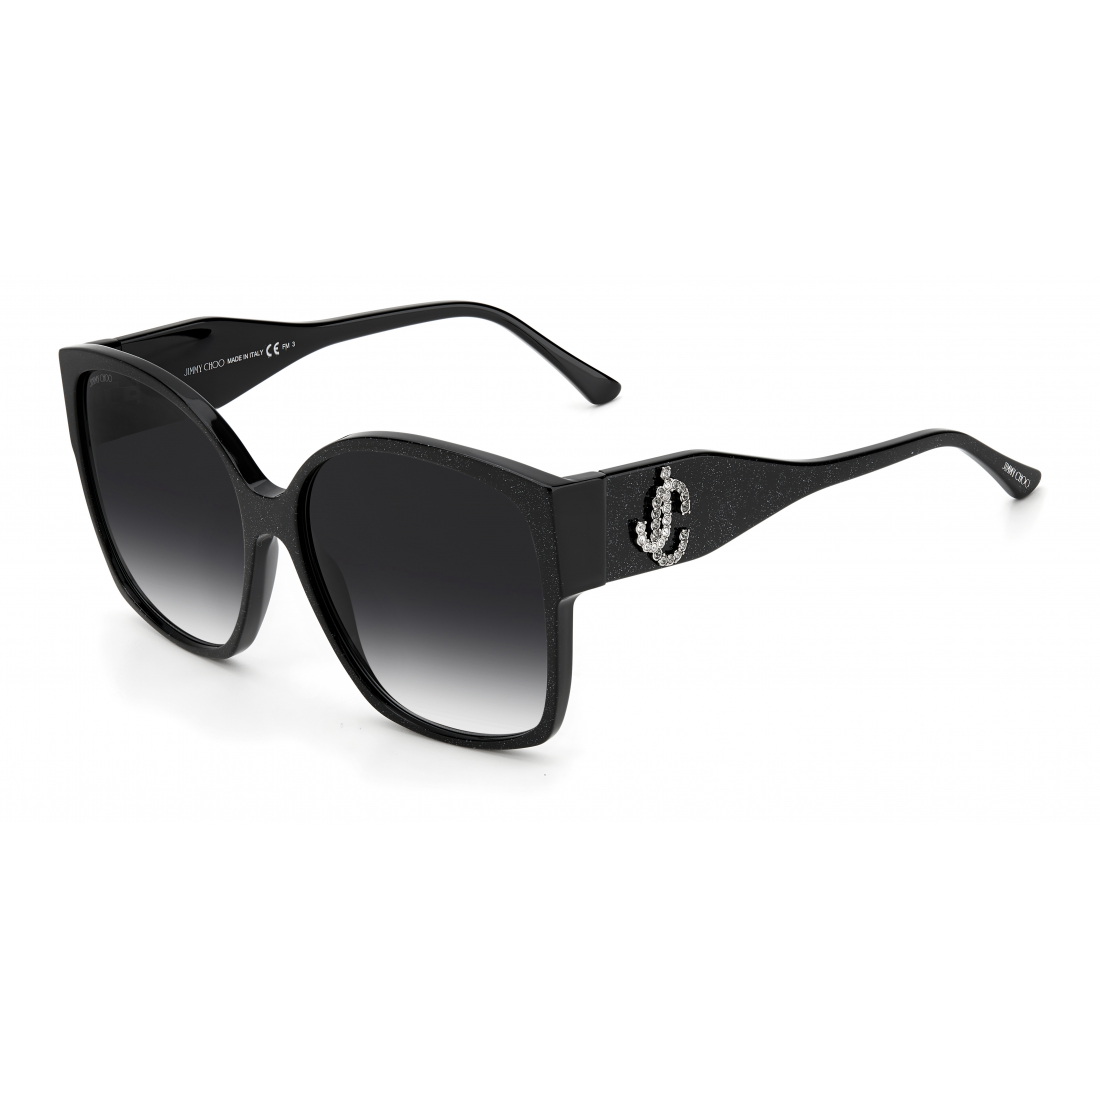 Women's 'NOEMI/S DXF9O' Sunglasses